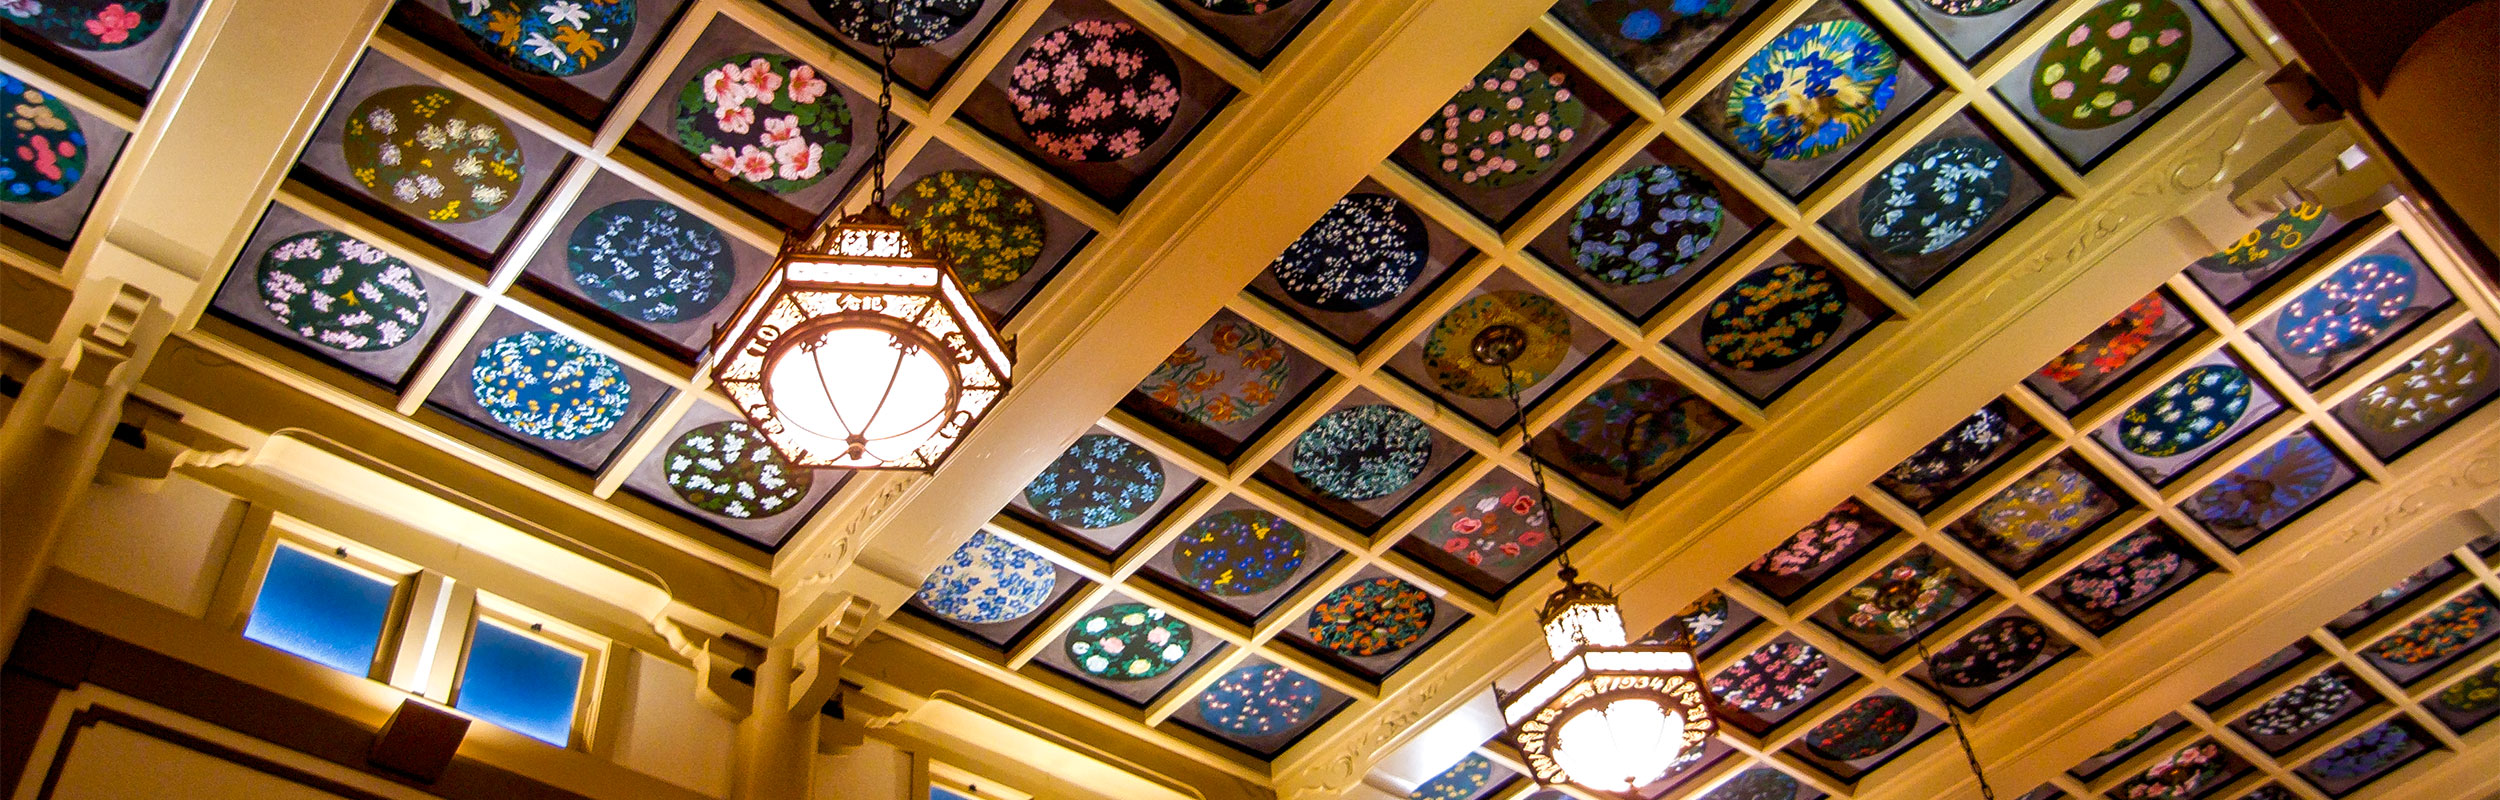 Makiki Christian Church's painted ceiling tiles